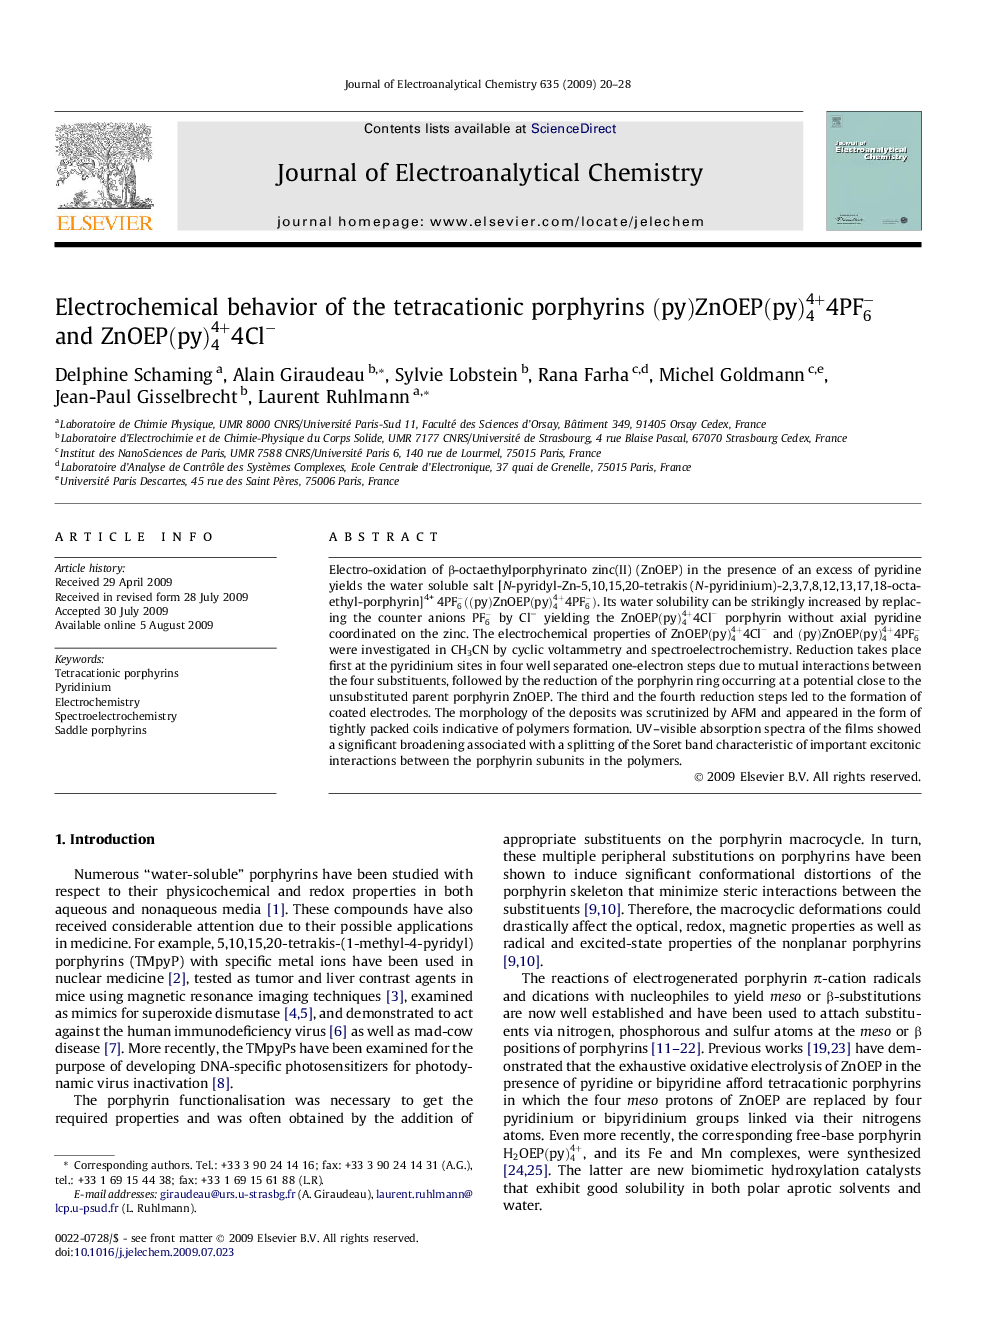 Electrochemical behavior of the tetracationic porphyrins (py)ZnOEP(py)44+4PF6- and ZnOEP(py)44+4Cl-